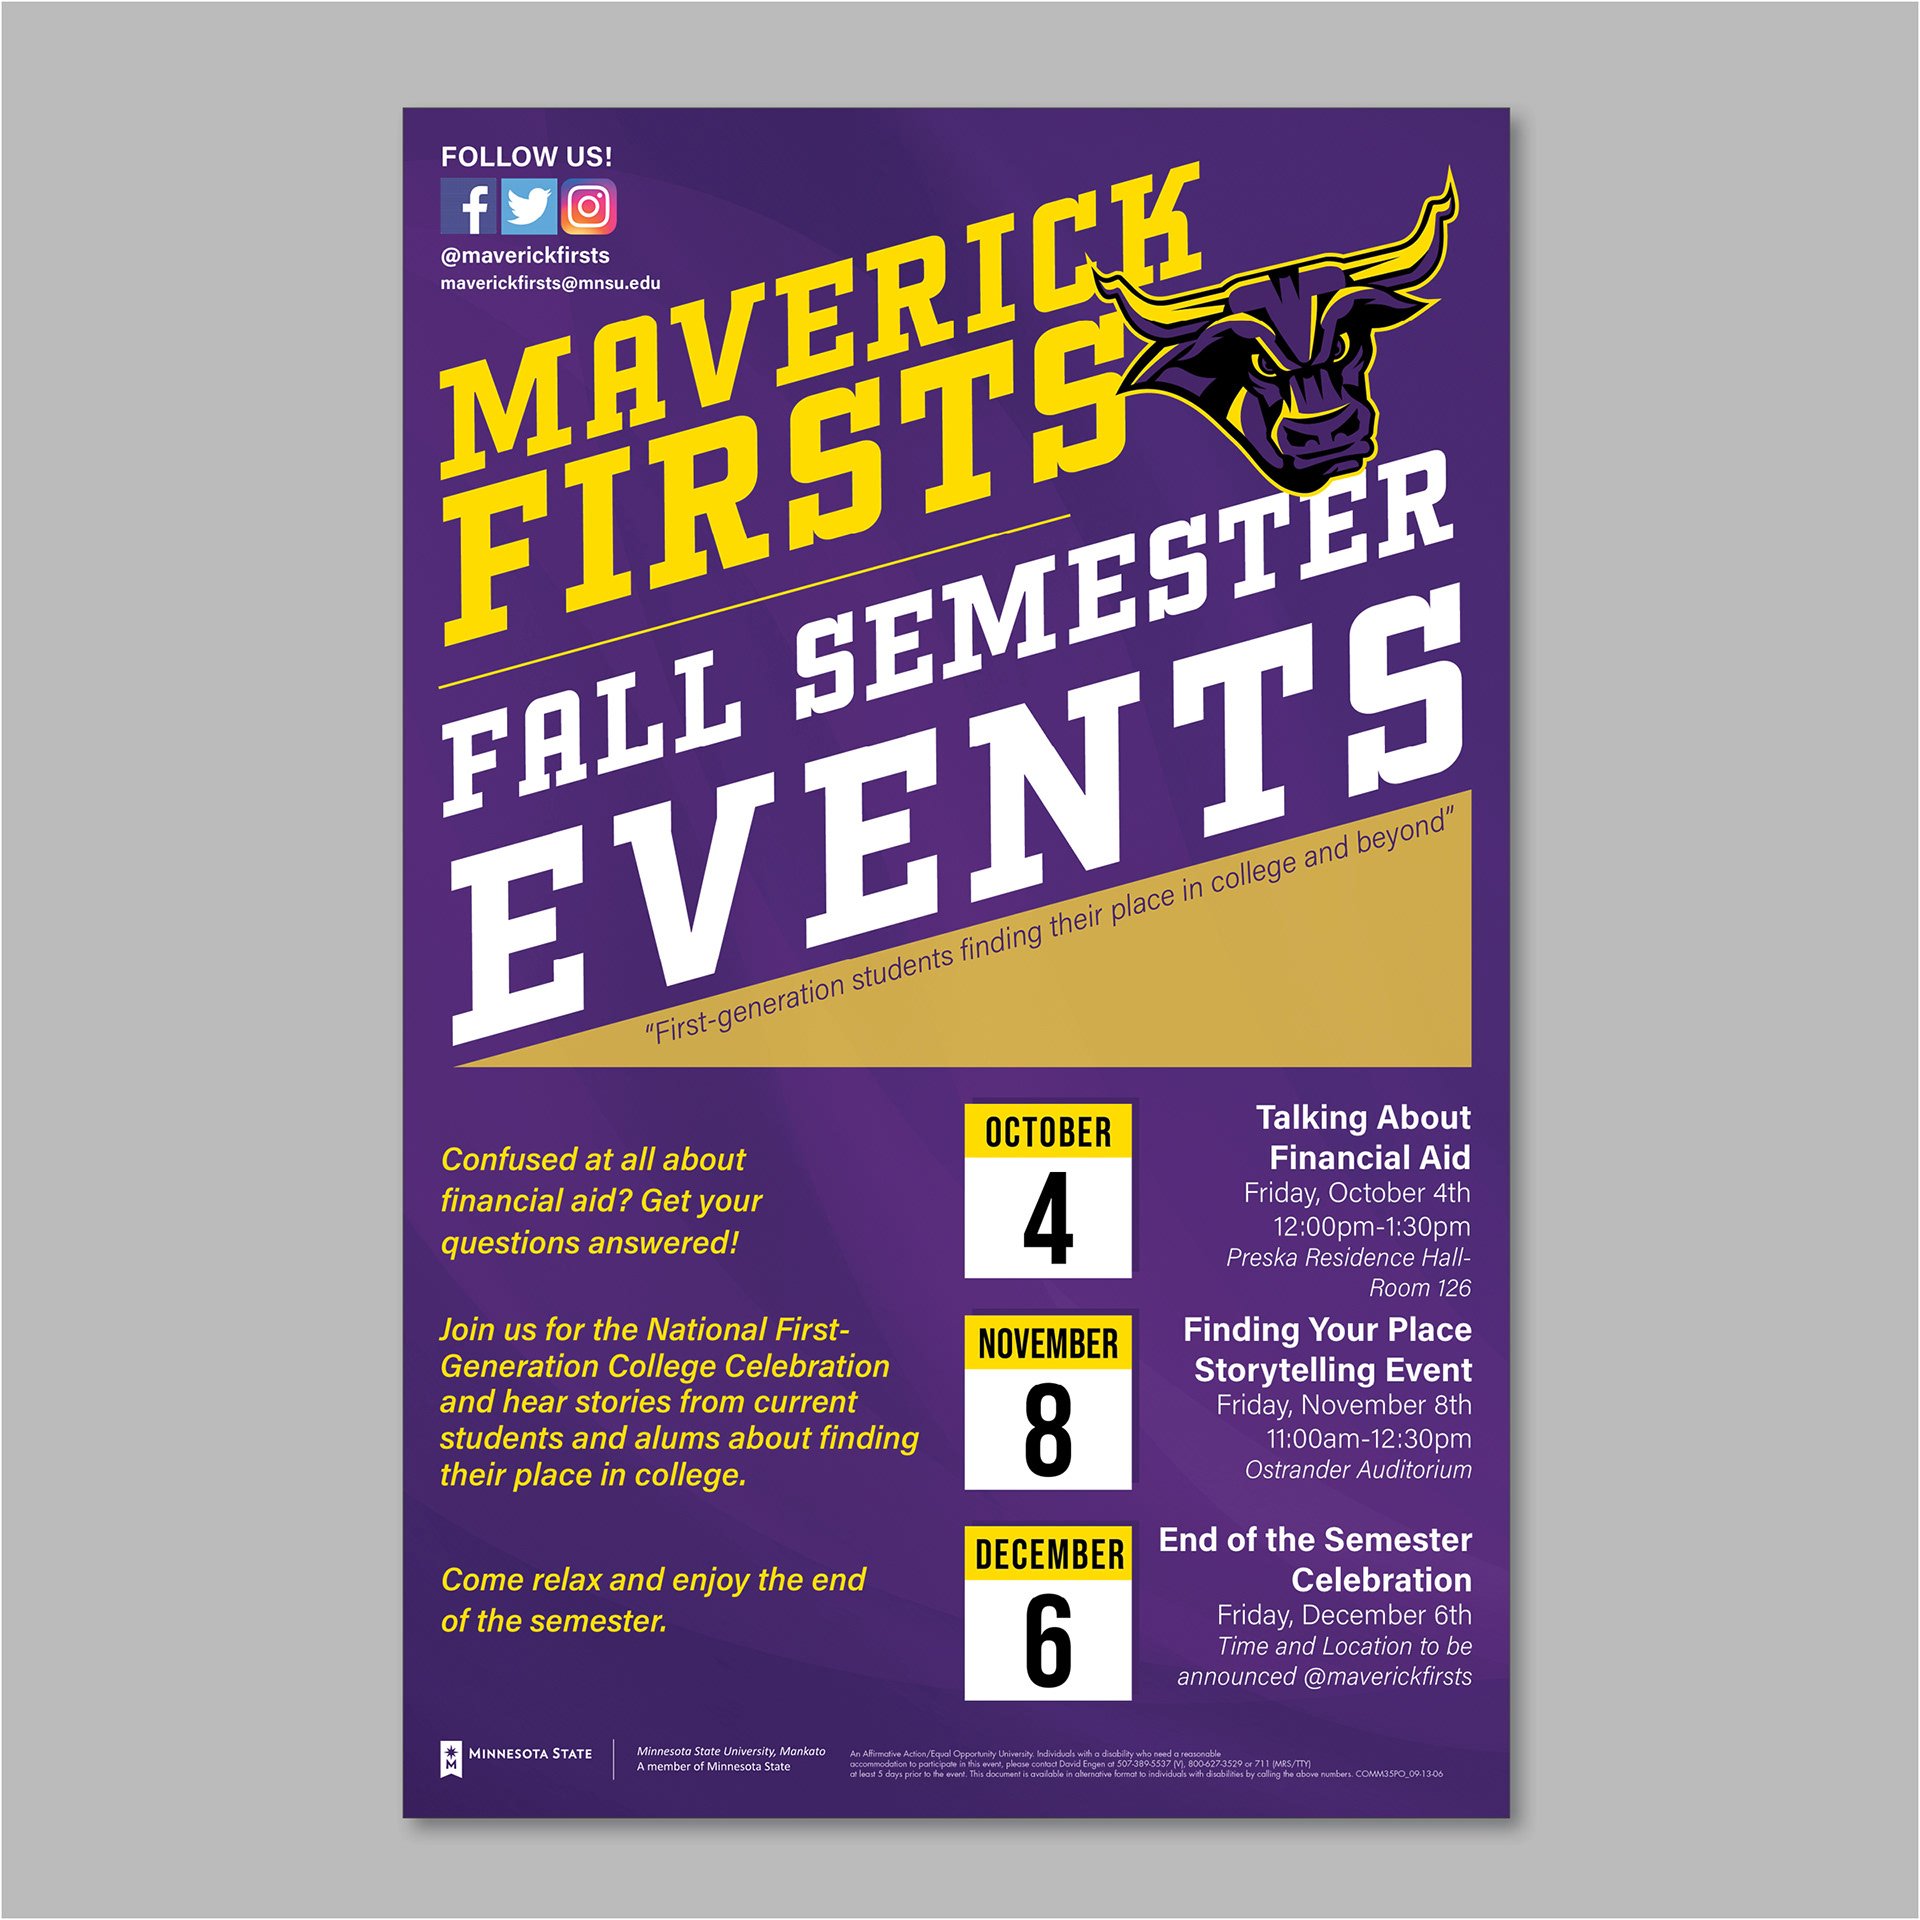 Mavericks firsts fall semester events poster